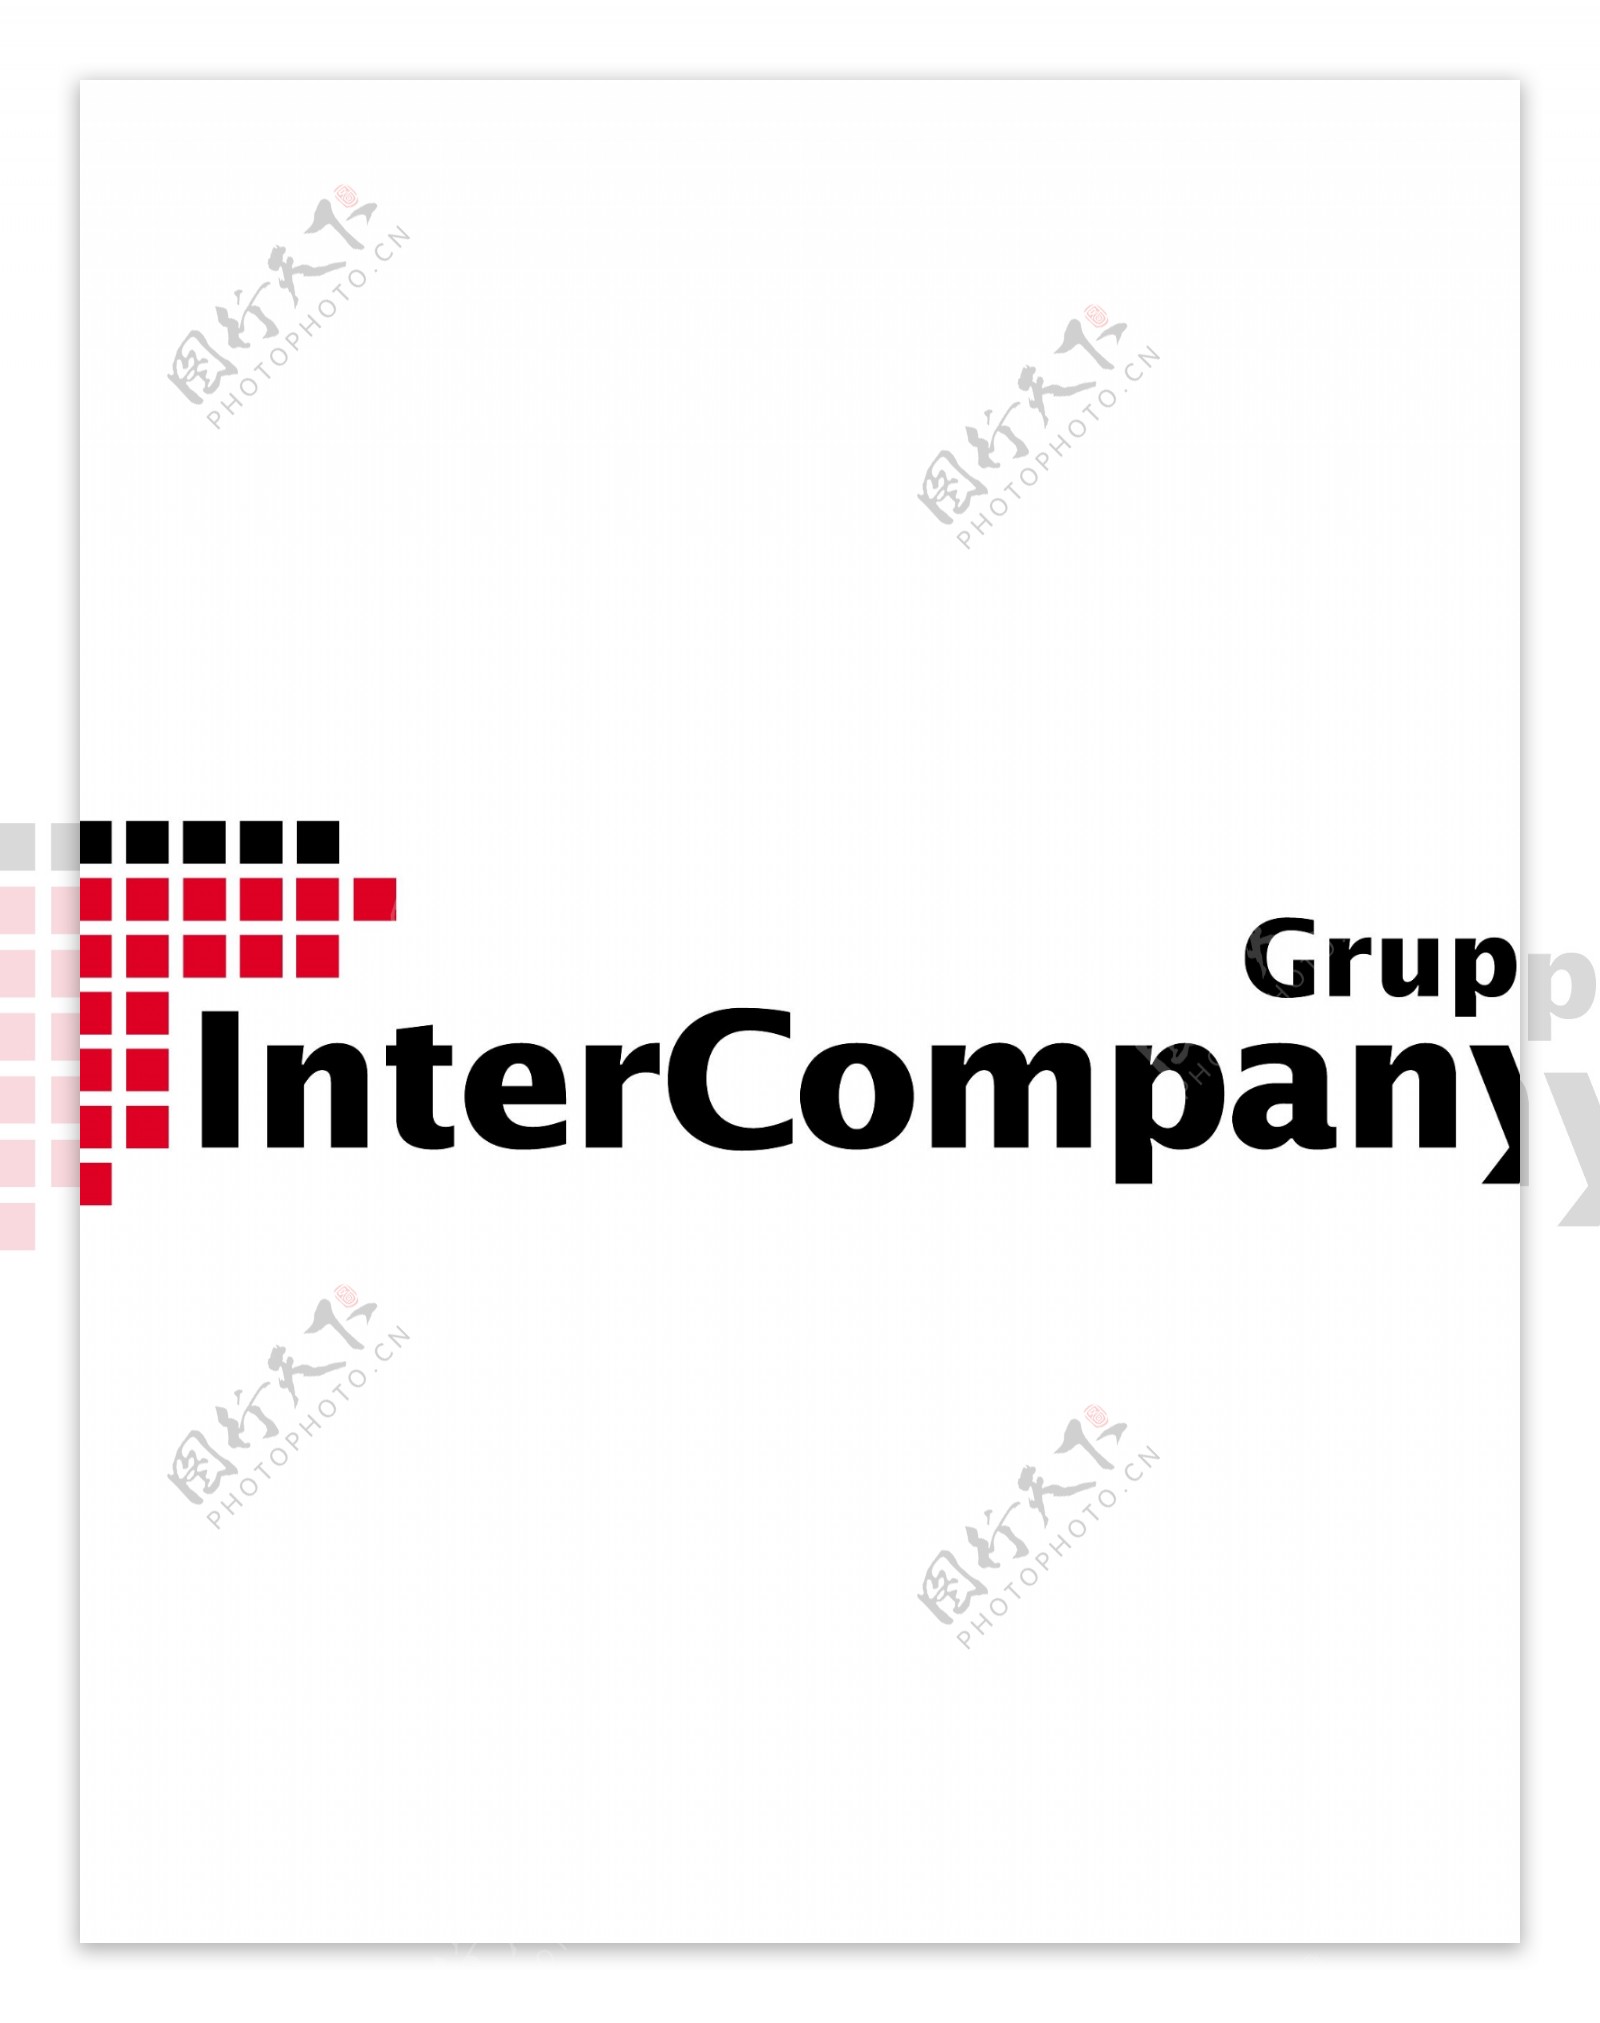 GrupoInterCompanylogo设计欣赏GrupoInterCompany电脑公司LOGO下载标志设计欣赏